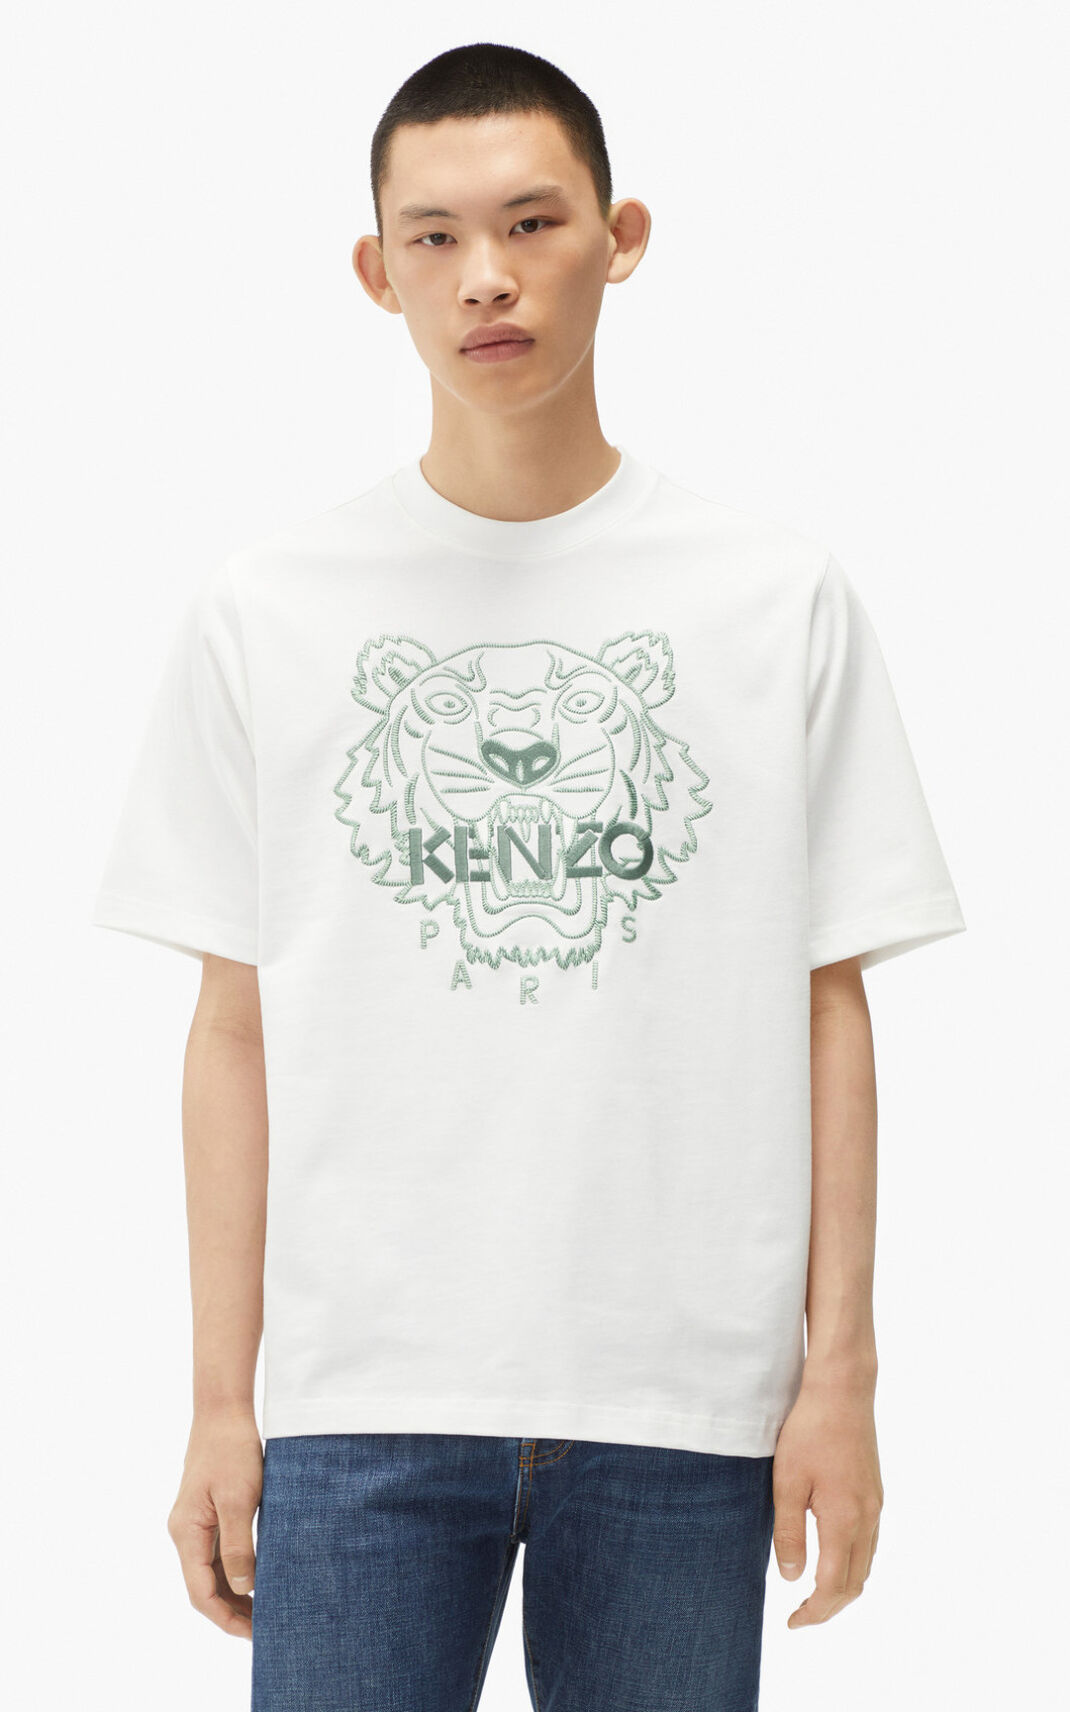 Kenzo Loose fitting 虎 Tシャツ メンズ 白 - UMZSVE897